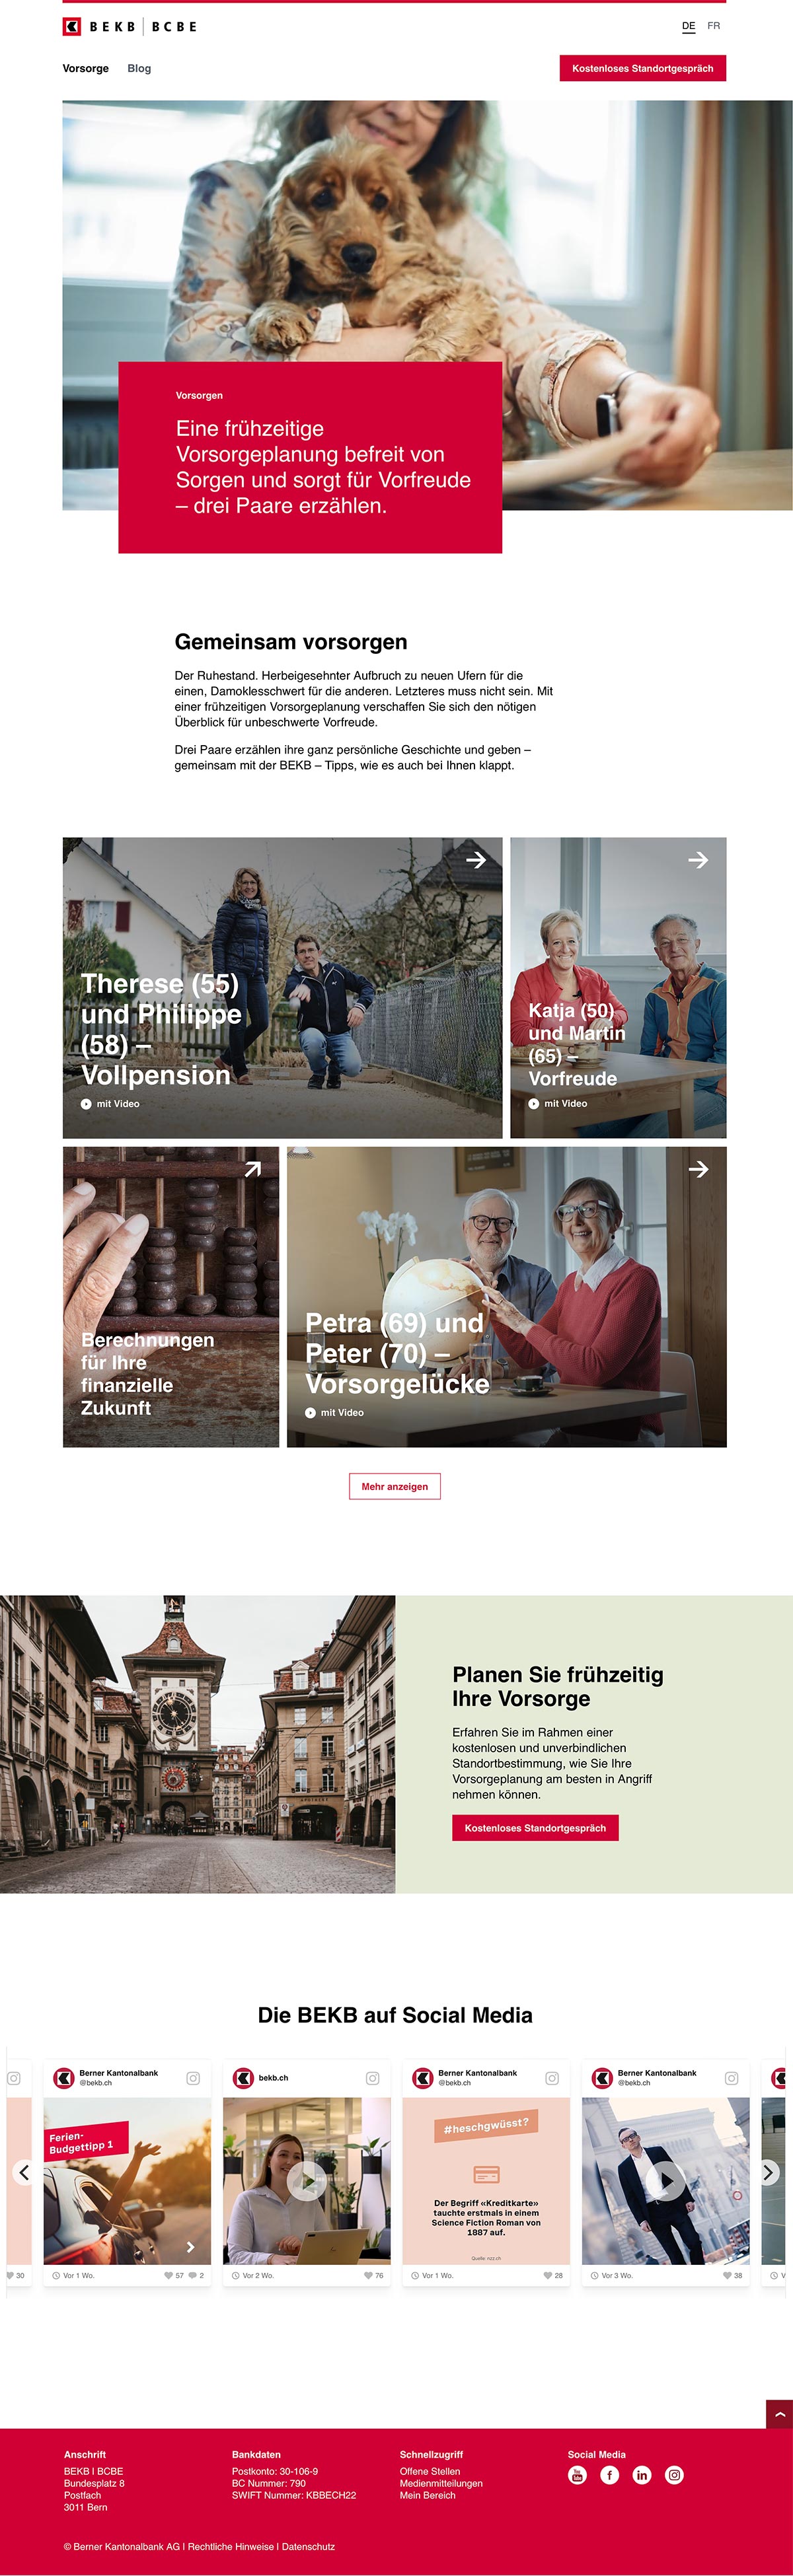 Webprojekt Berner Kantonalbank Banking, Soziales & Kultur